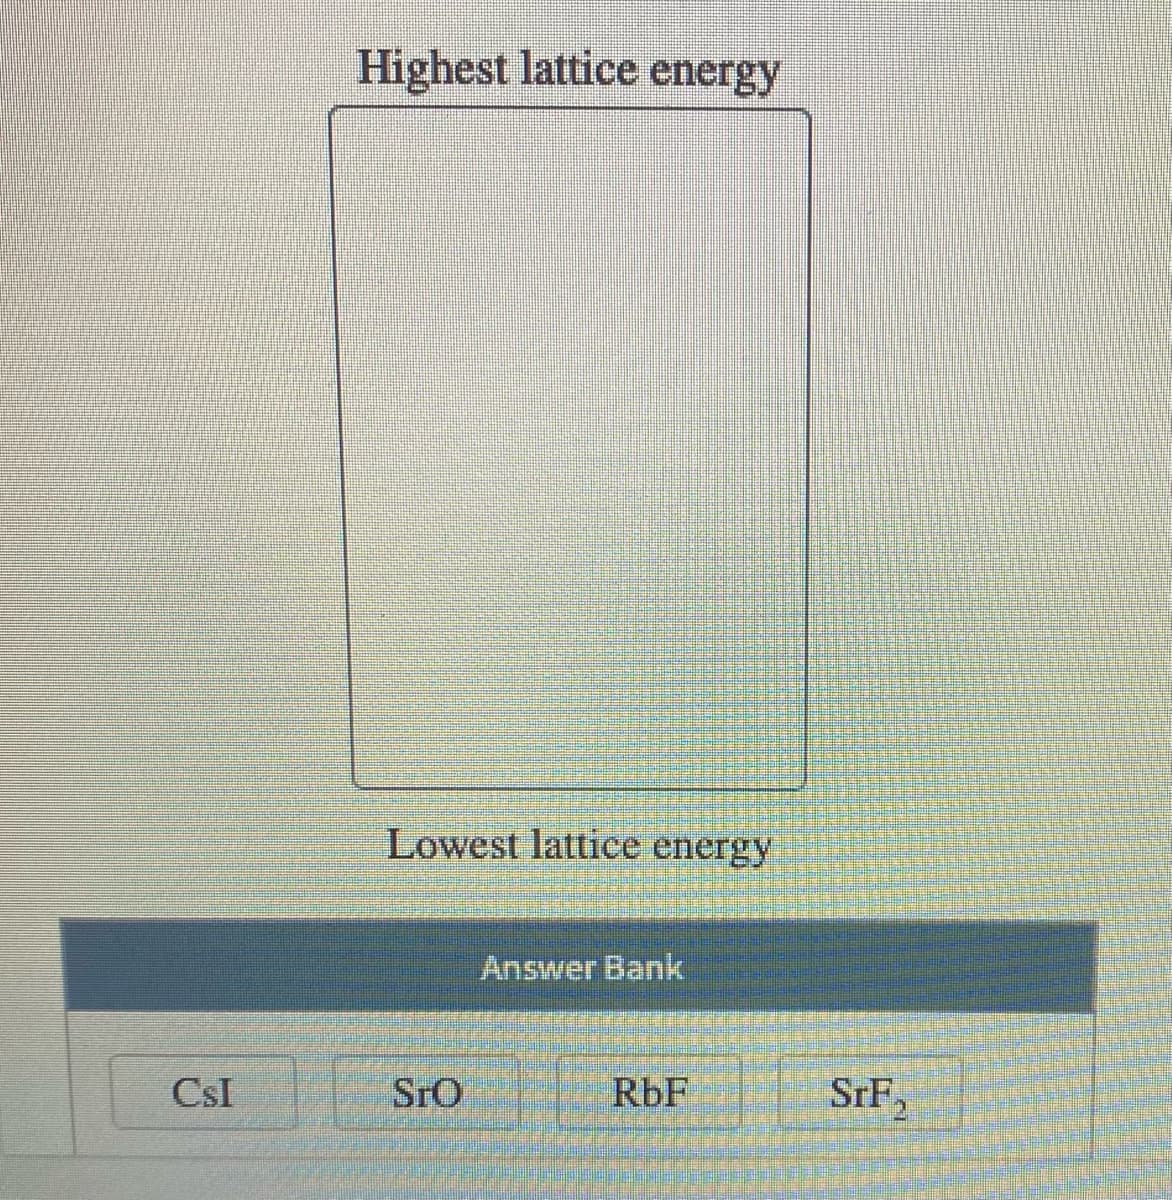 Highest lattice energy
Lowest lattice energy
Answer Bank
CsI
SrO
RbF
SrF,
